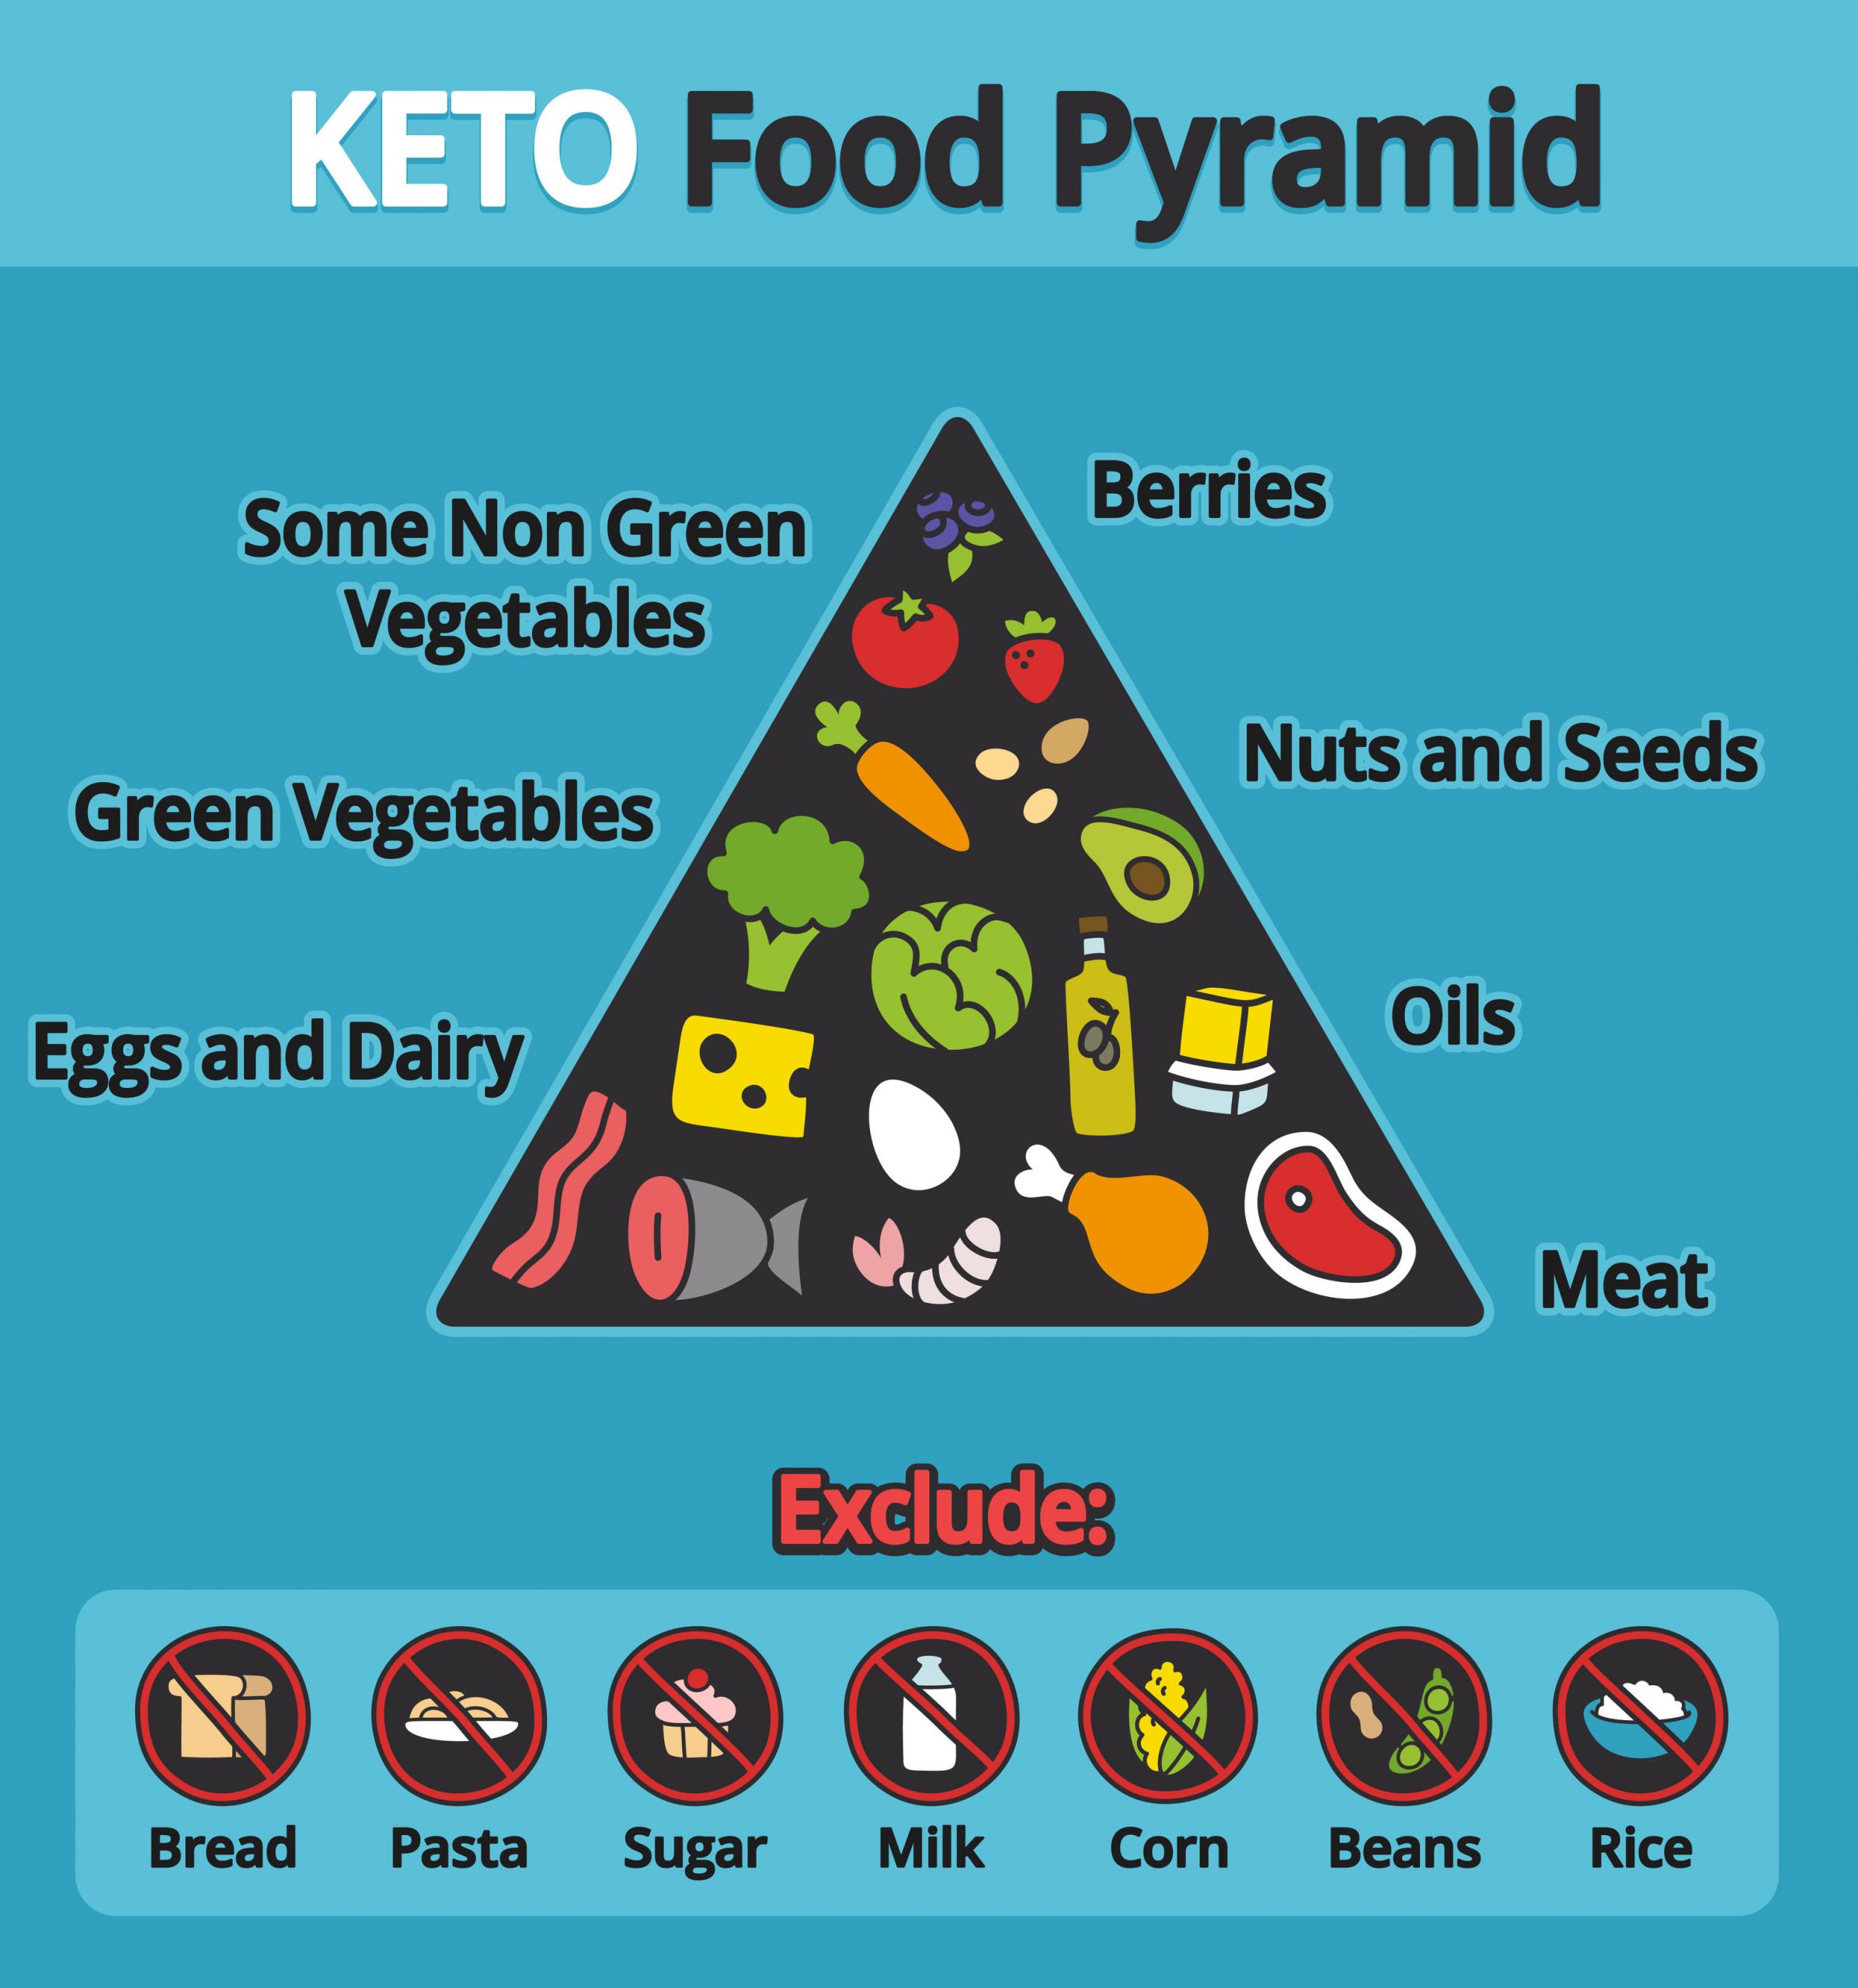 Keto Diet Food Pyramid
 Ketogenic Dieting for Fat Loss